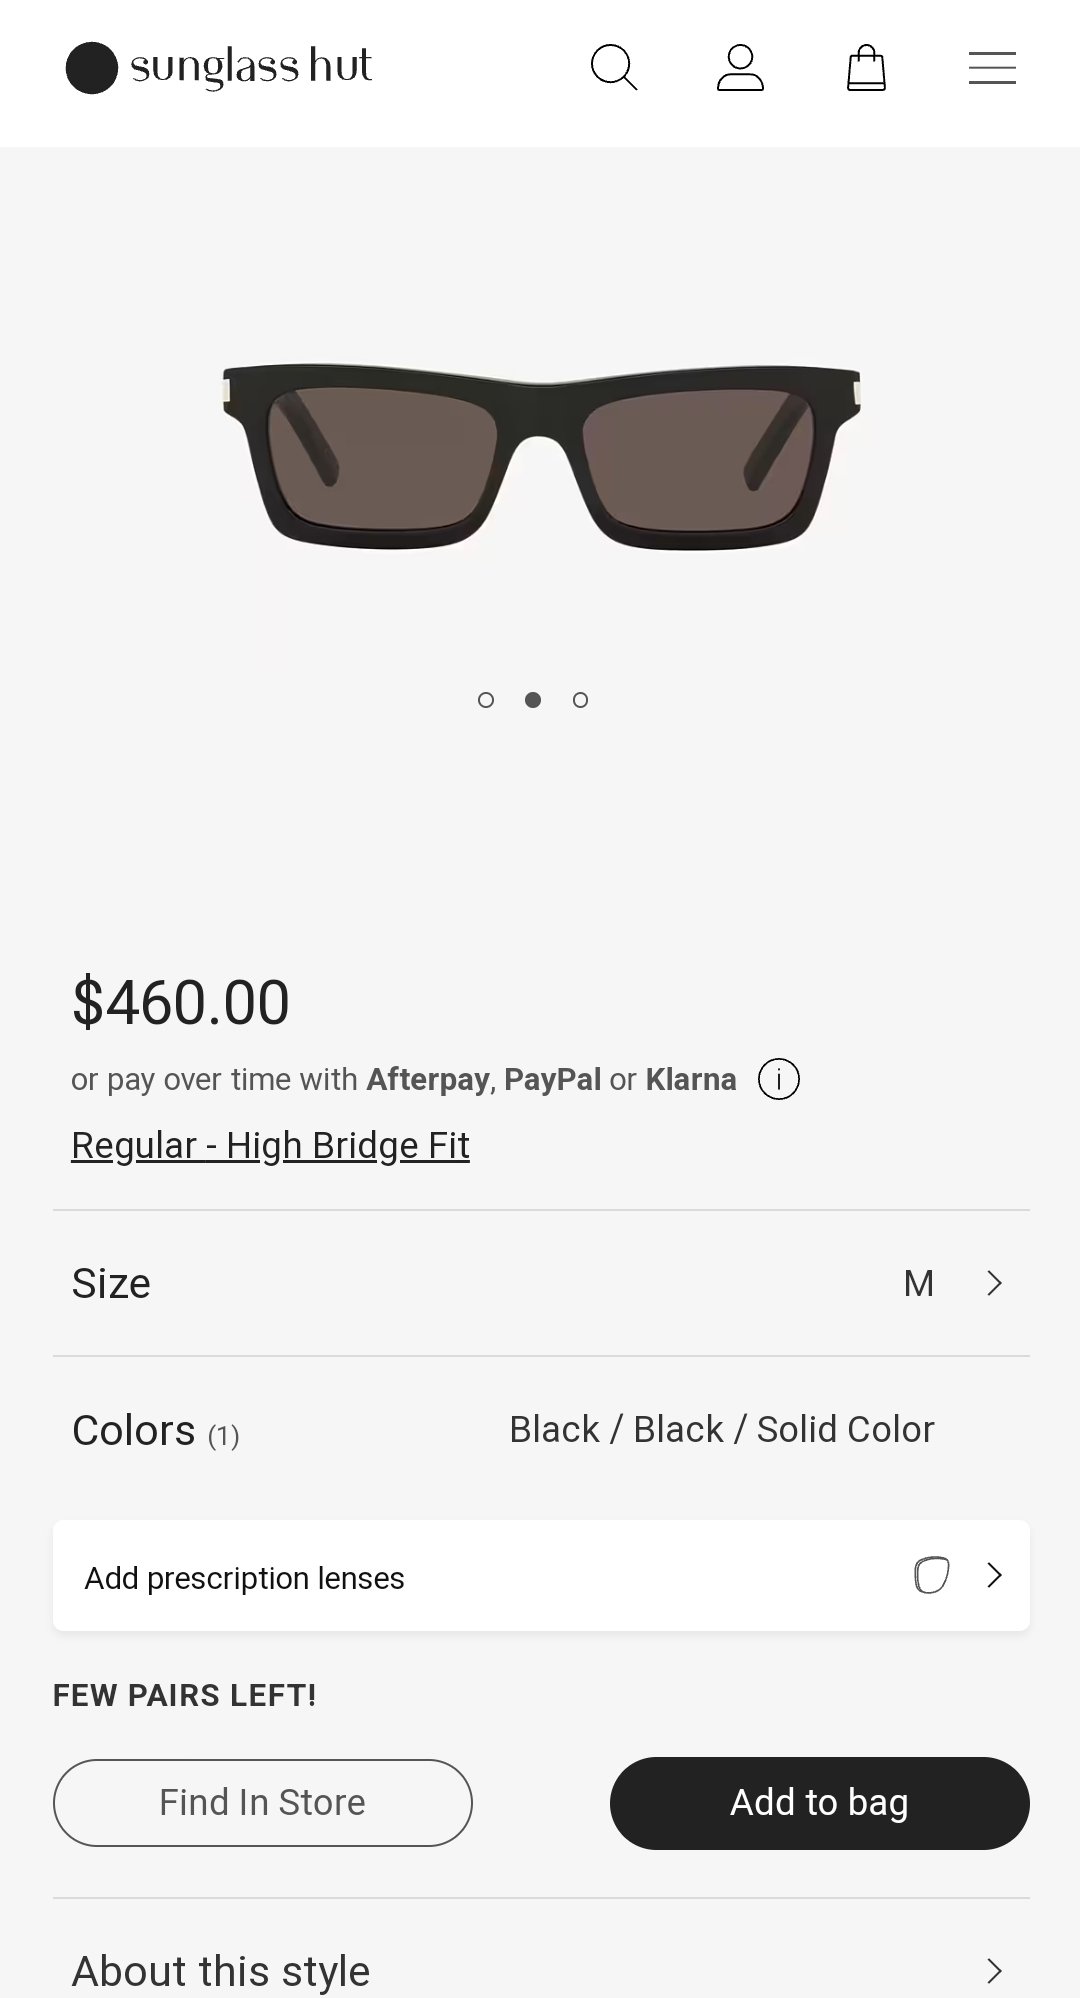 Gucci GG1221S 56 Grey & Gold Sunglasses | Sunglass Hut USA